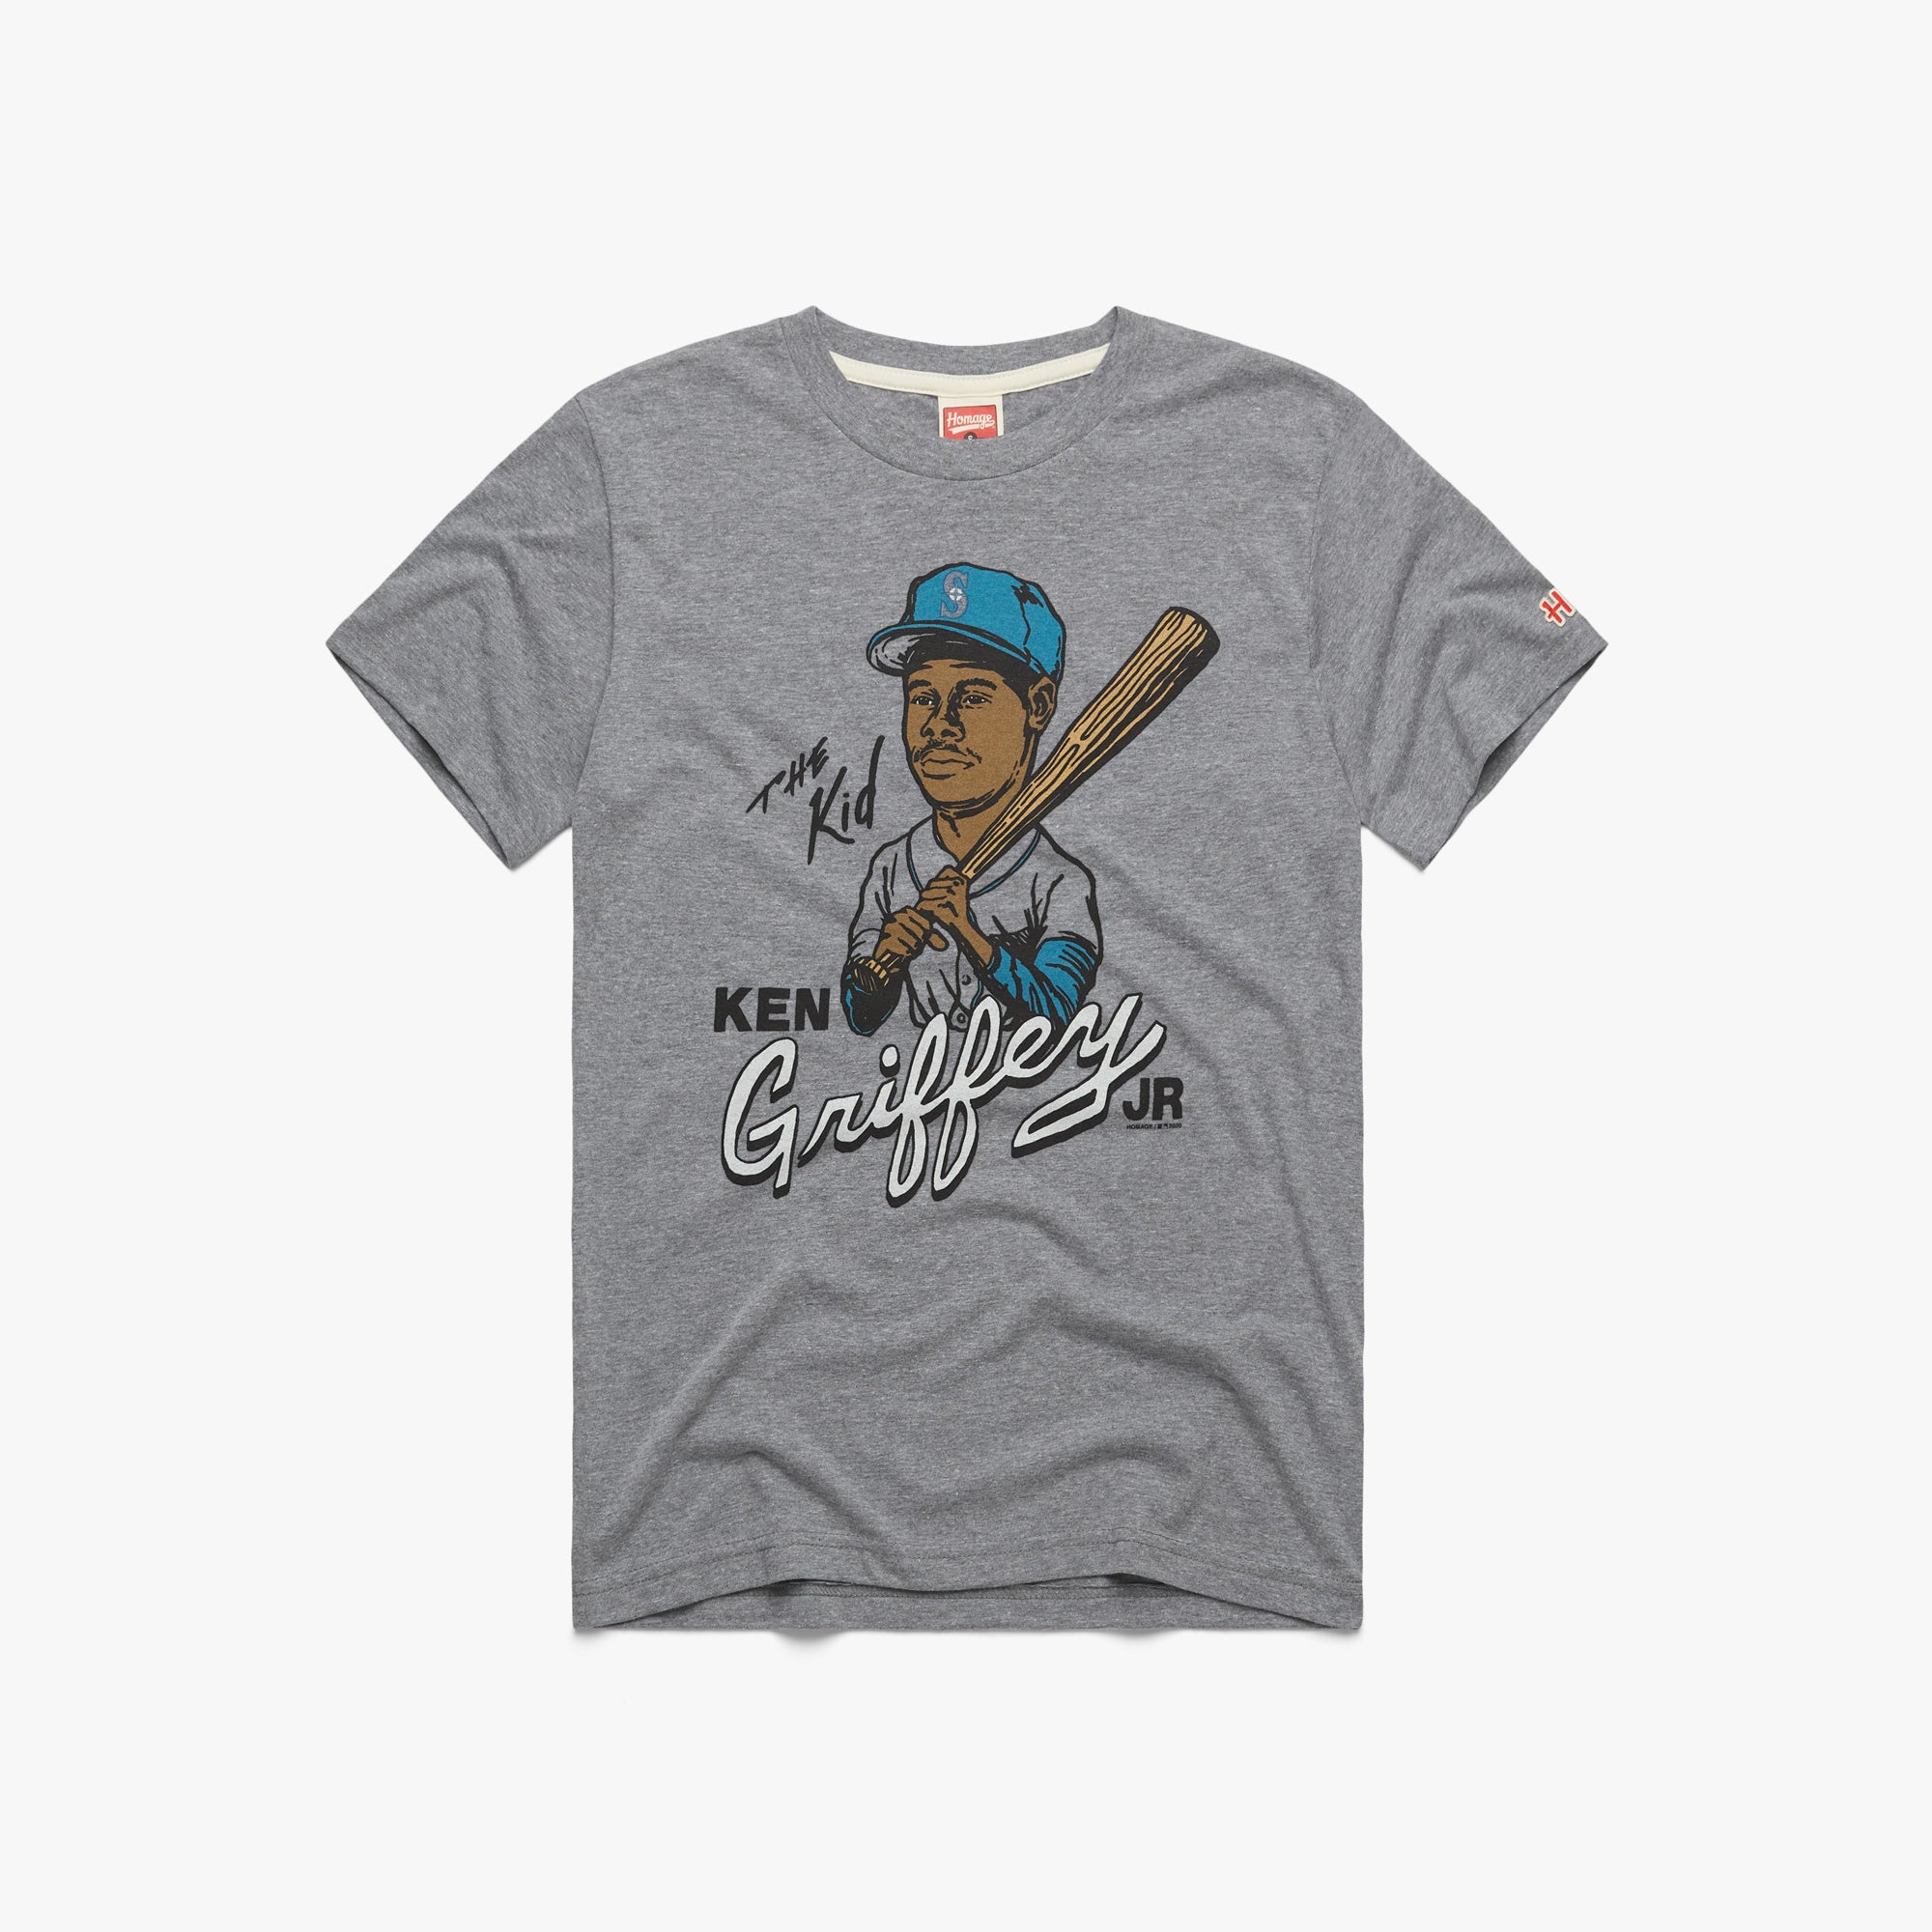 Ken Griffey Jr. Celebration Kids T-Shirt for Sale by RatTrapTees